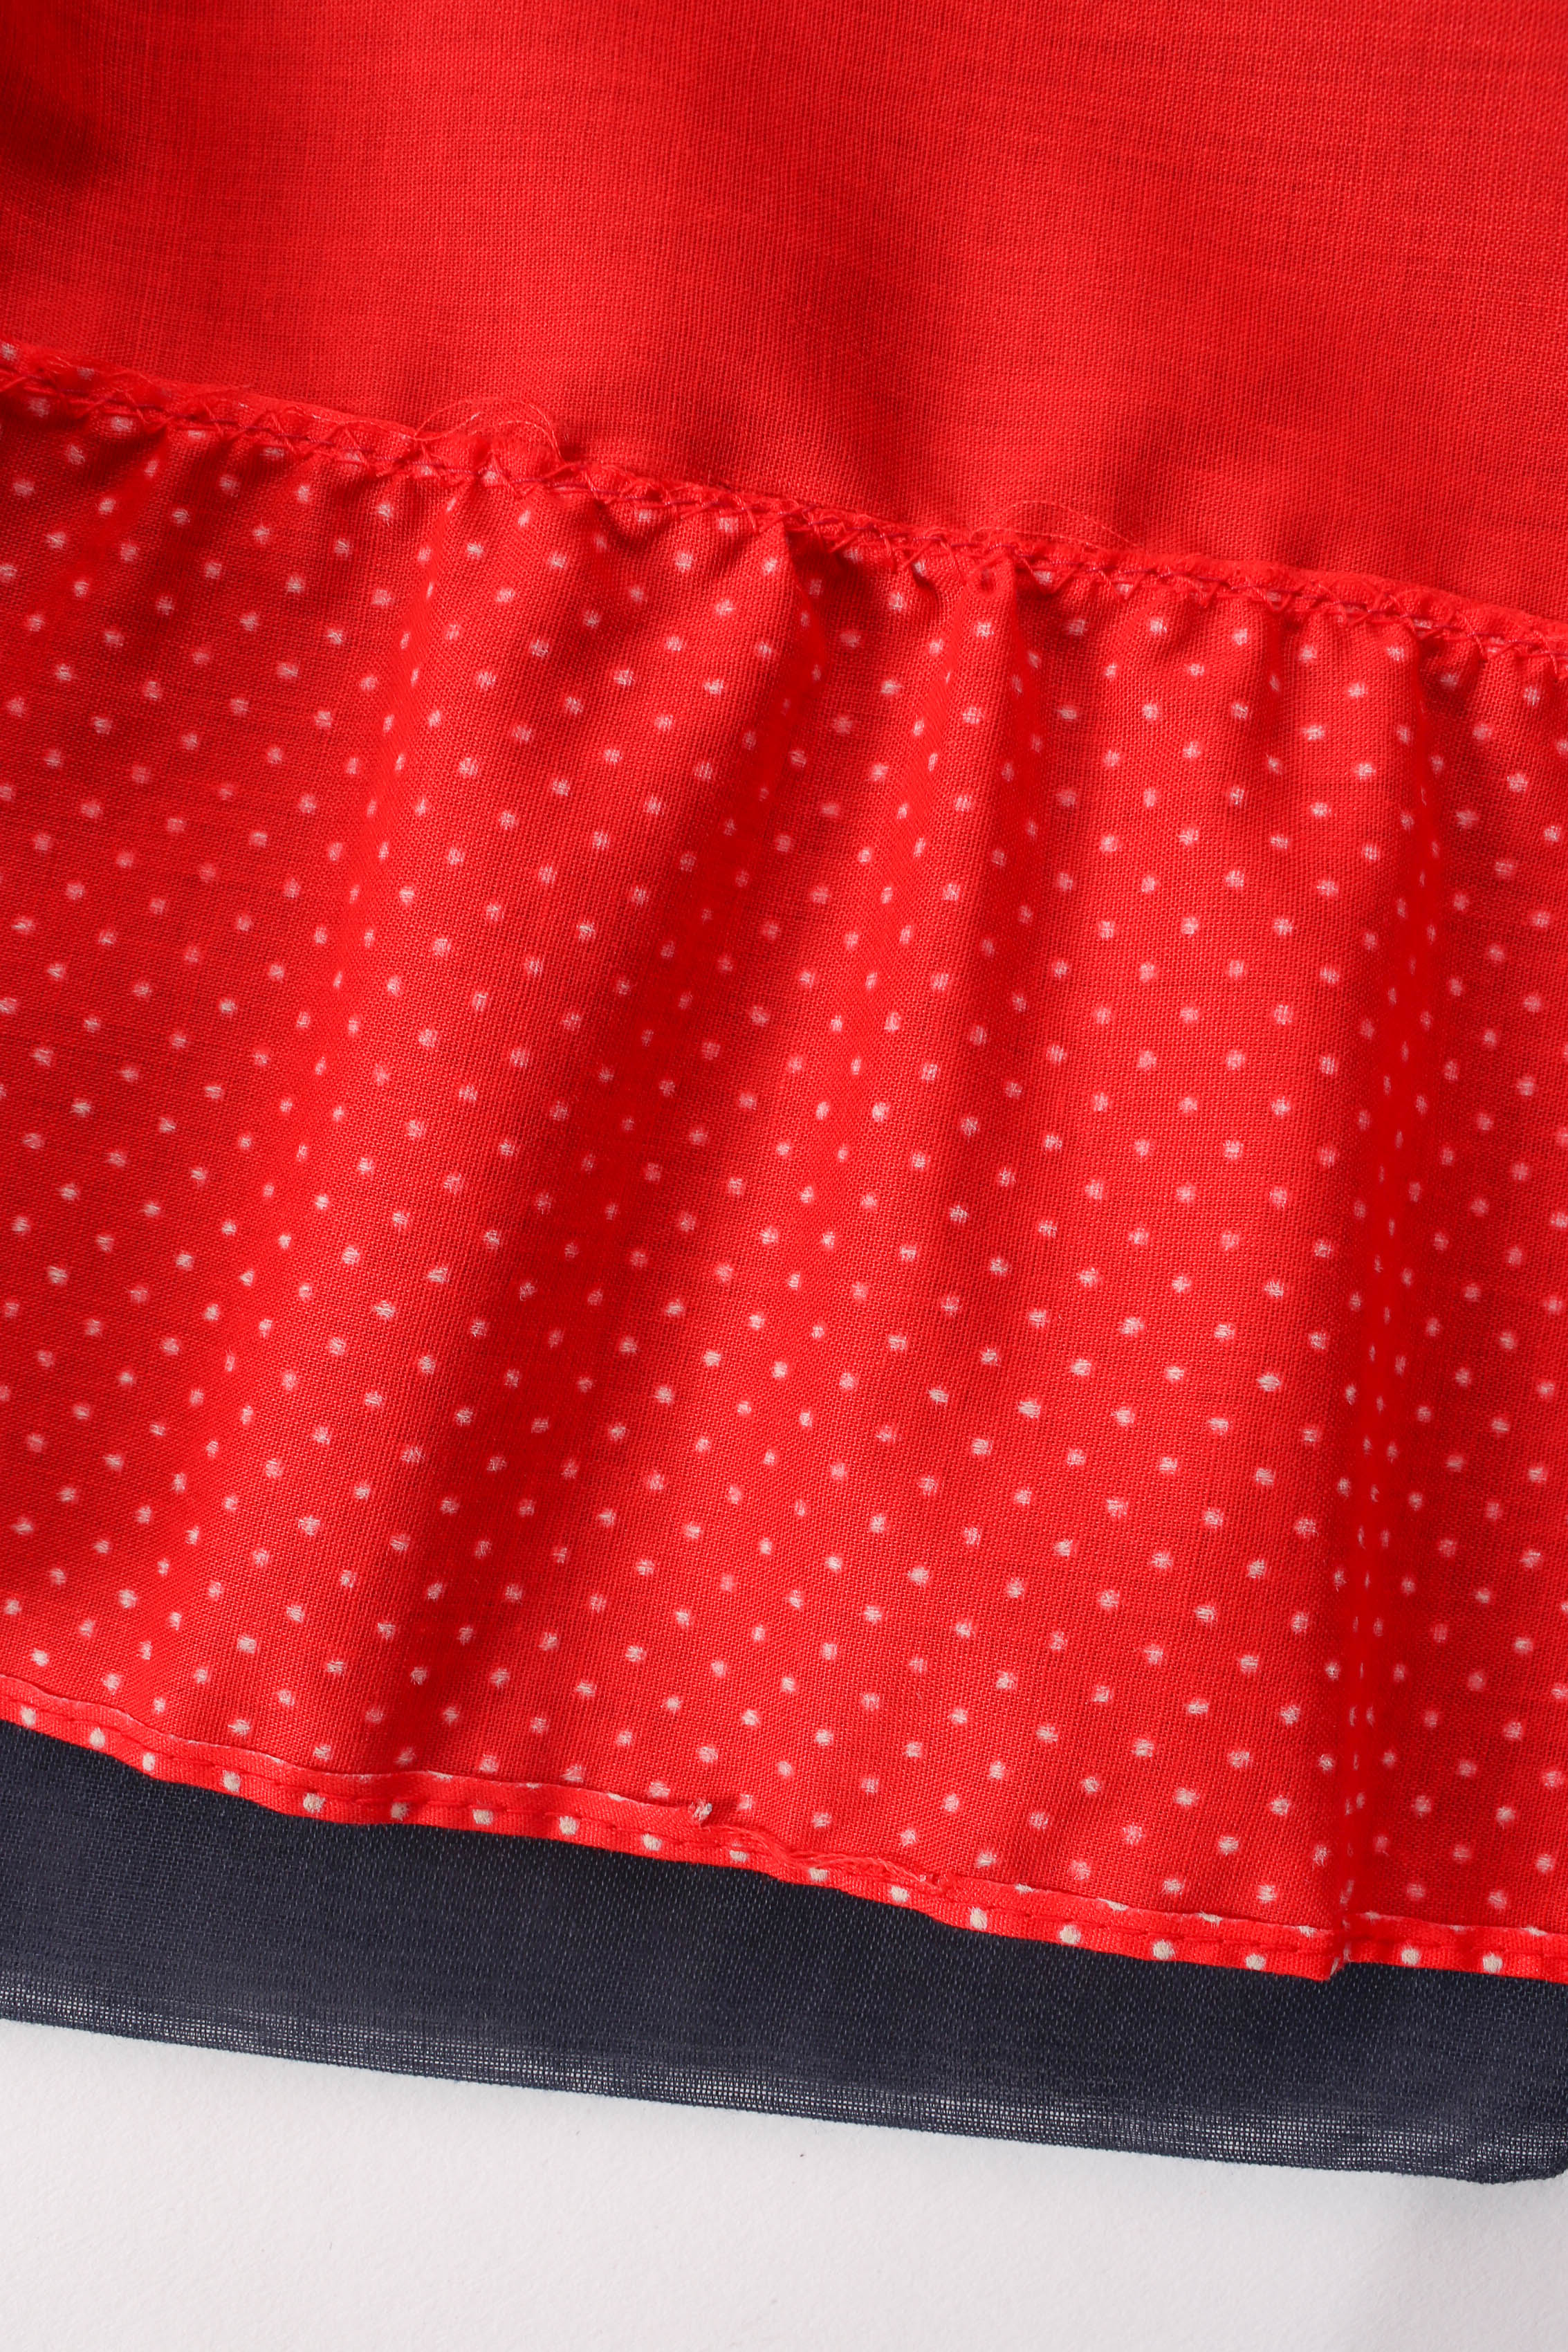 Vintage Mole for I.Magnin Strawberry Patch Skirt inverse/dotted hemline  @ Recess LA